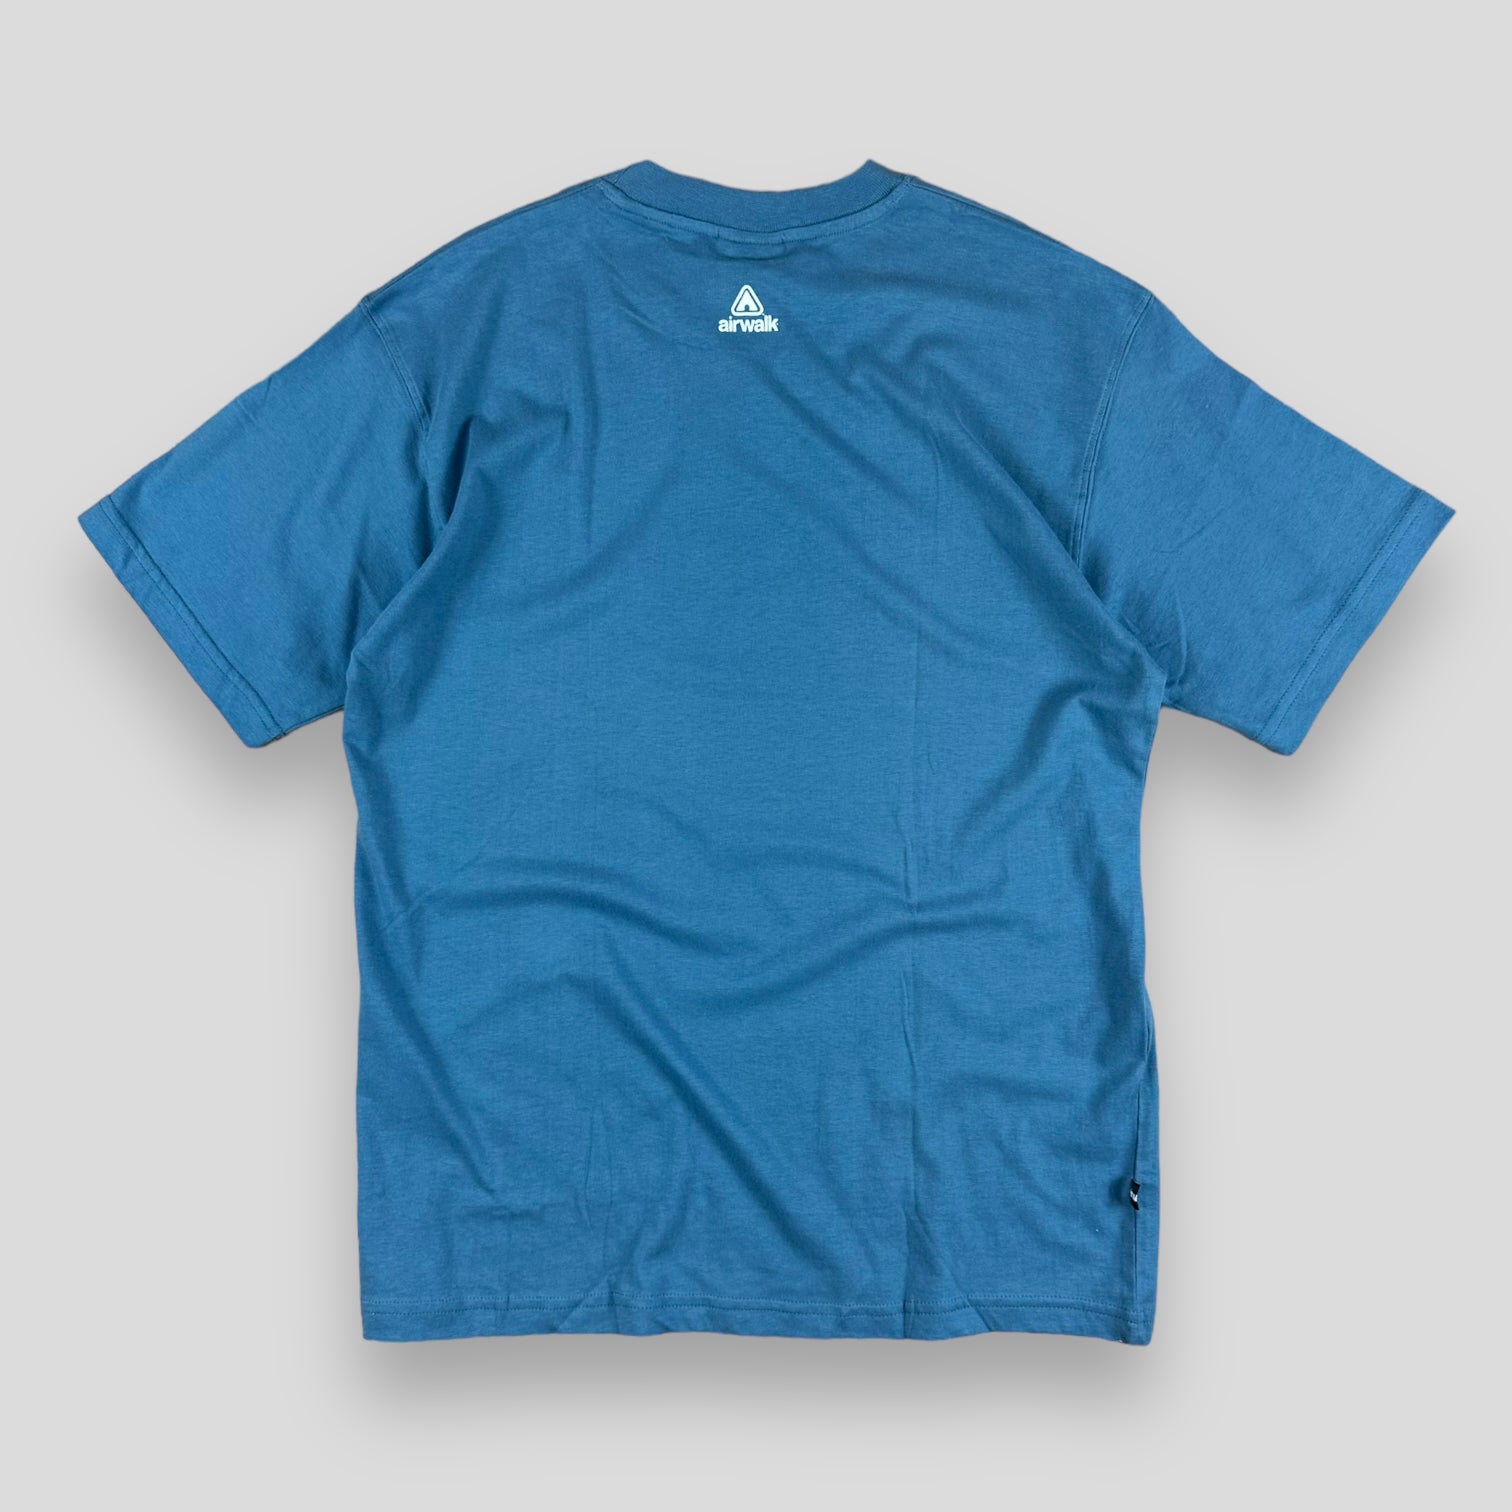 Airwalk graphic T-shirt